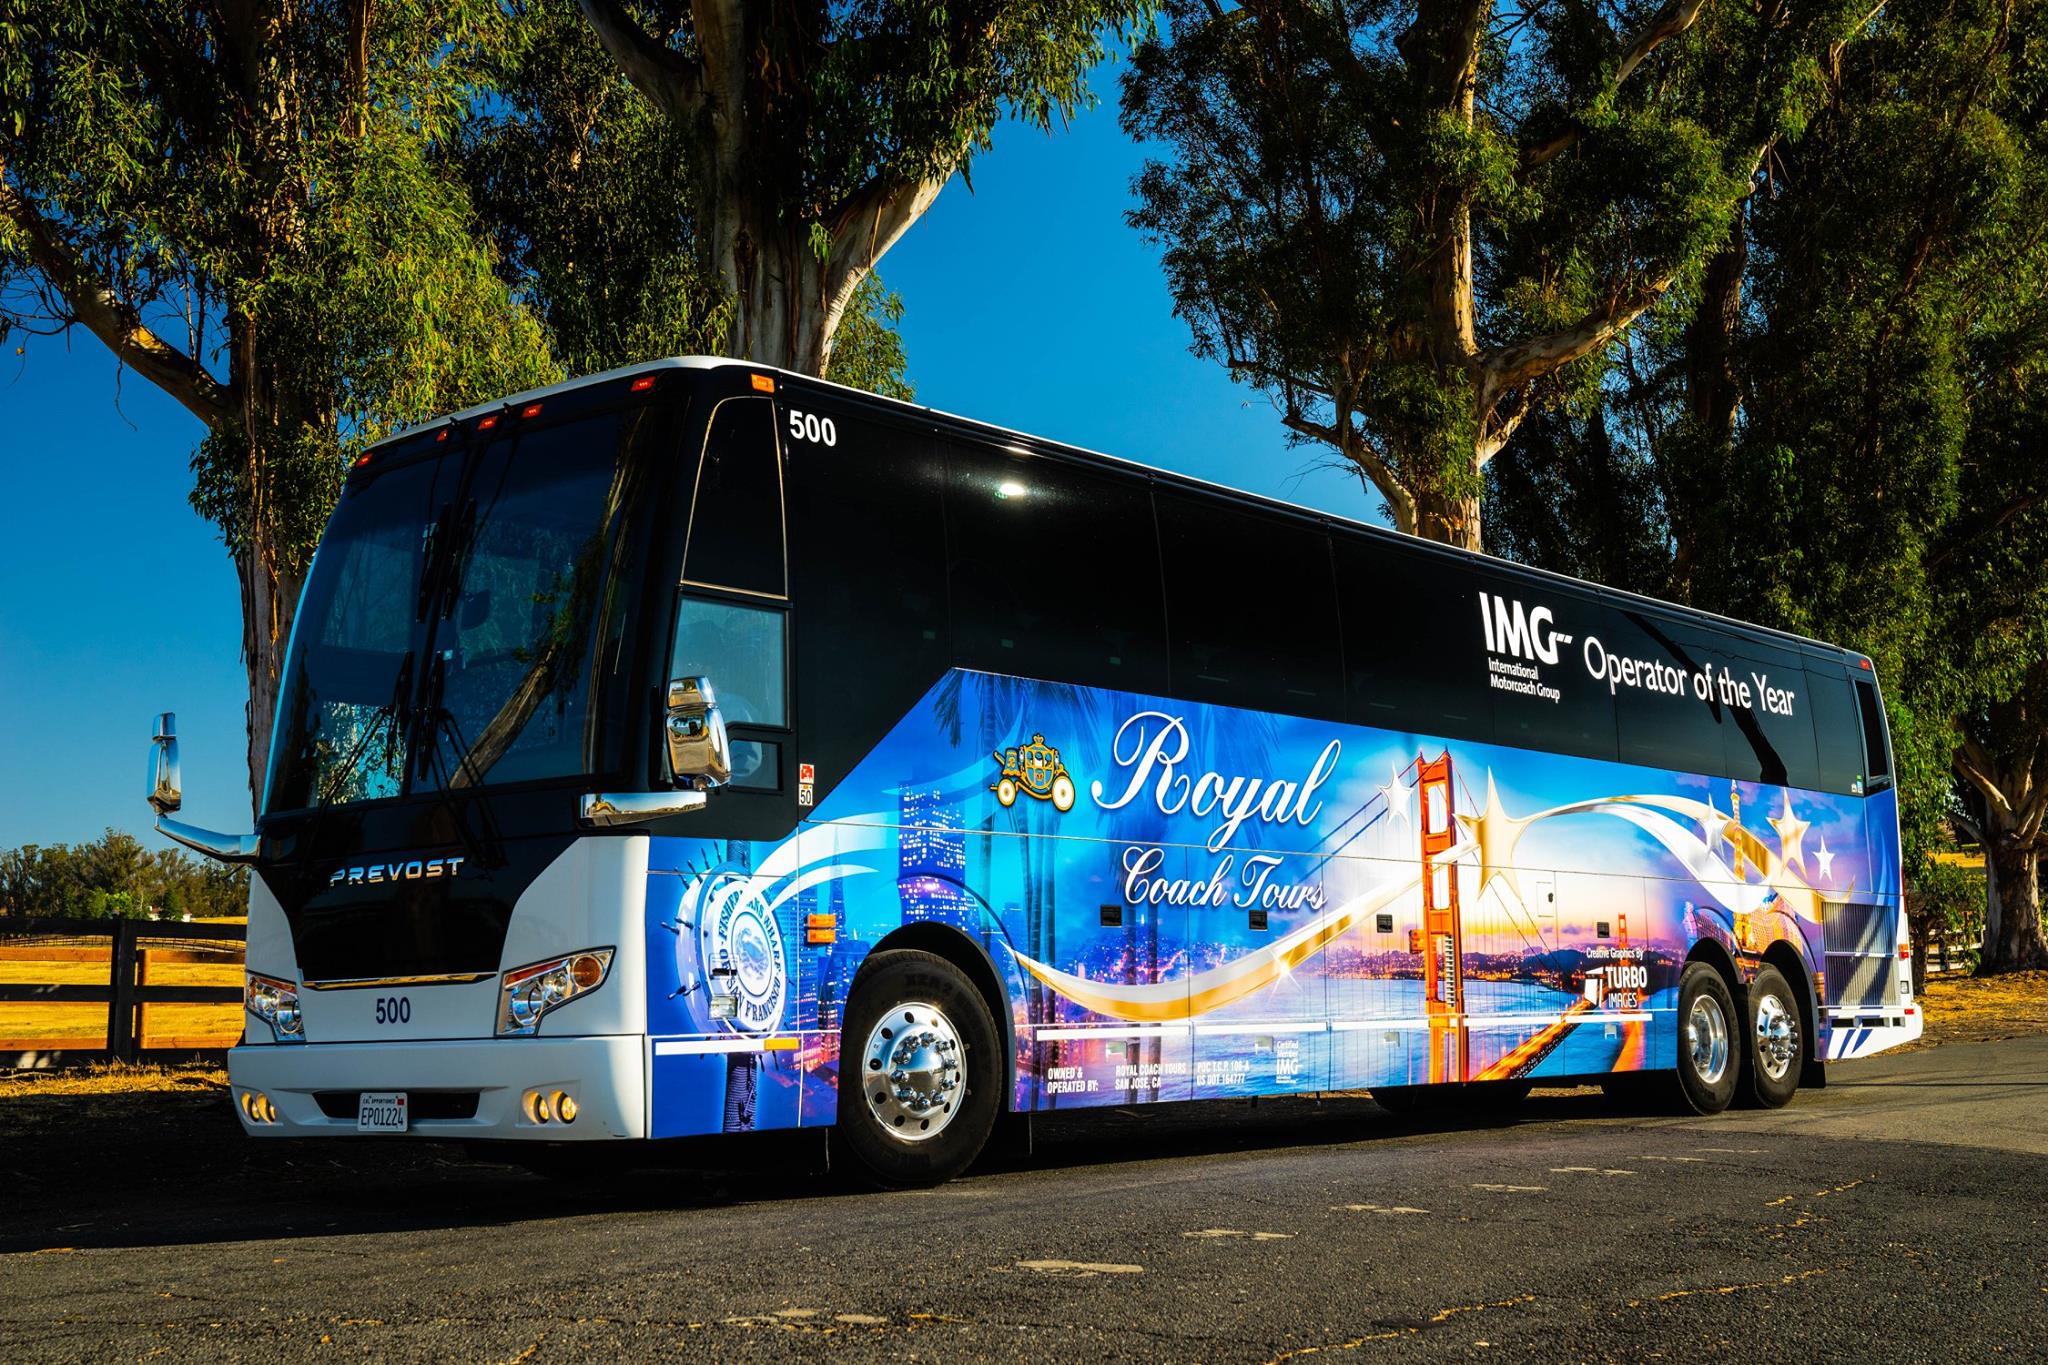 royal coach tour bus